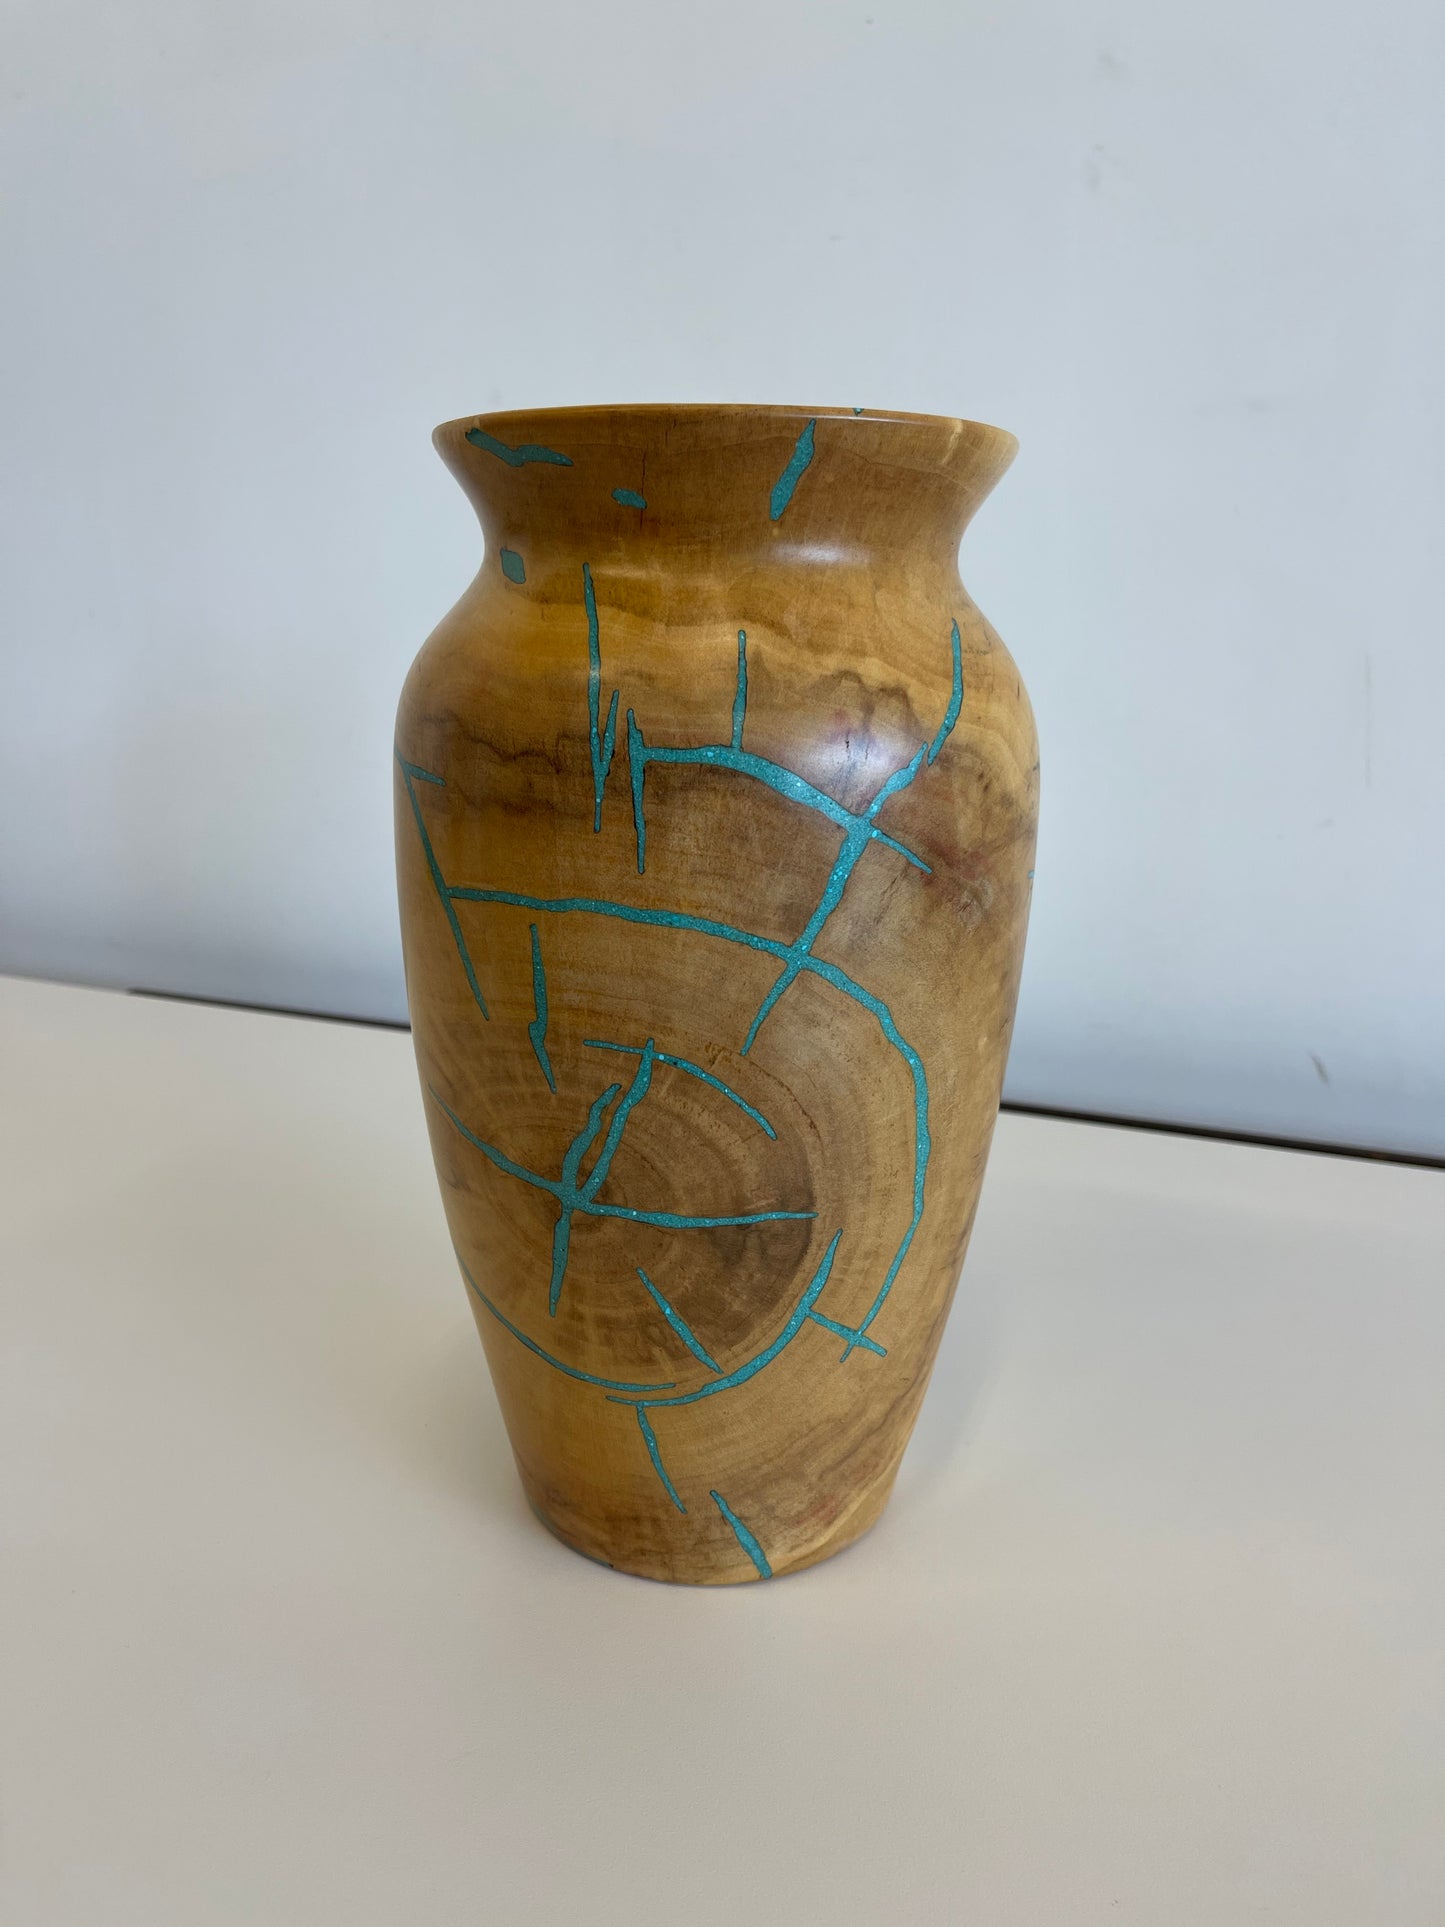 Studio-craft Turned Wood Vase with Turquoise Inlay